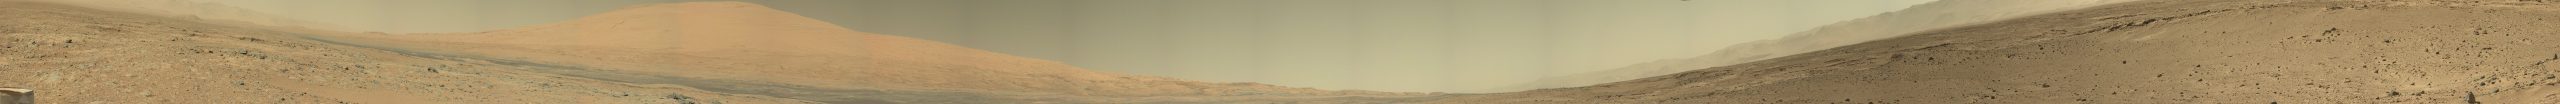 Panorama transmis par le rover Curiosity